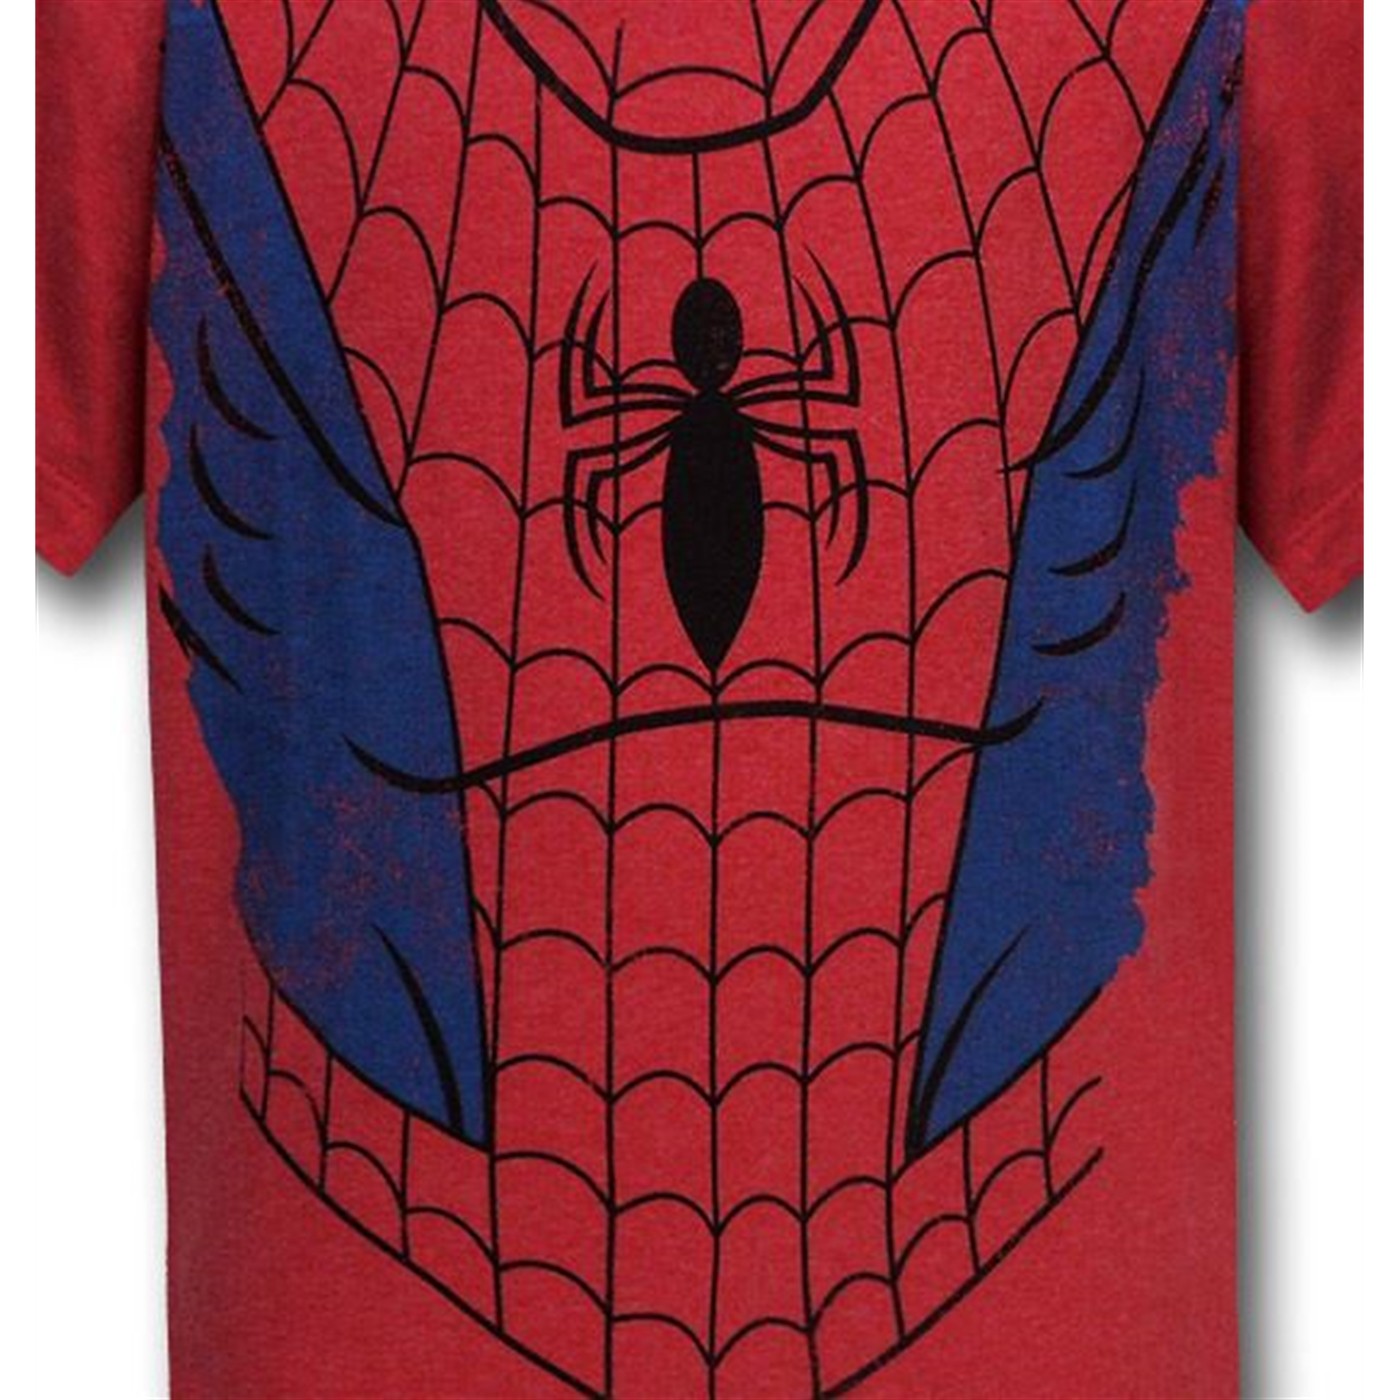 Spiderman Kids Classic Costume T-Shirt